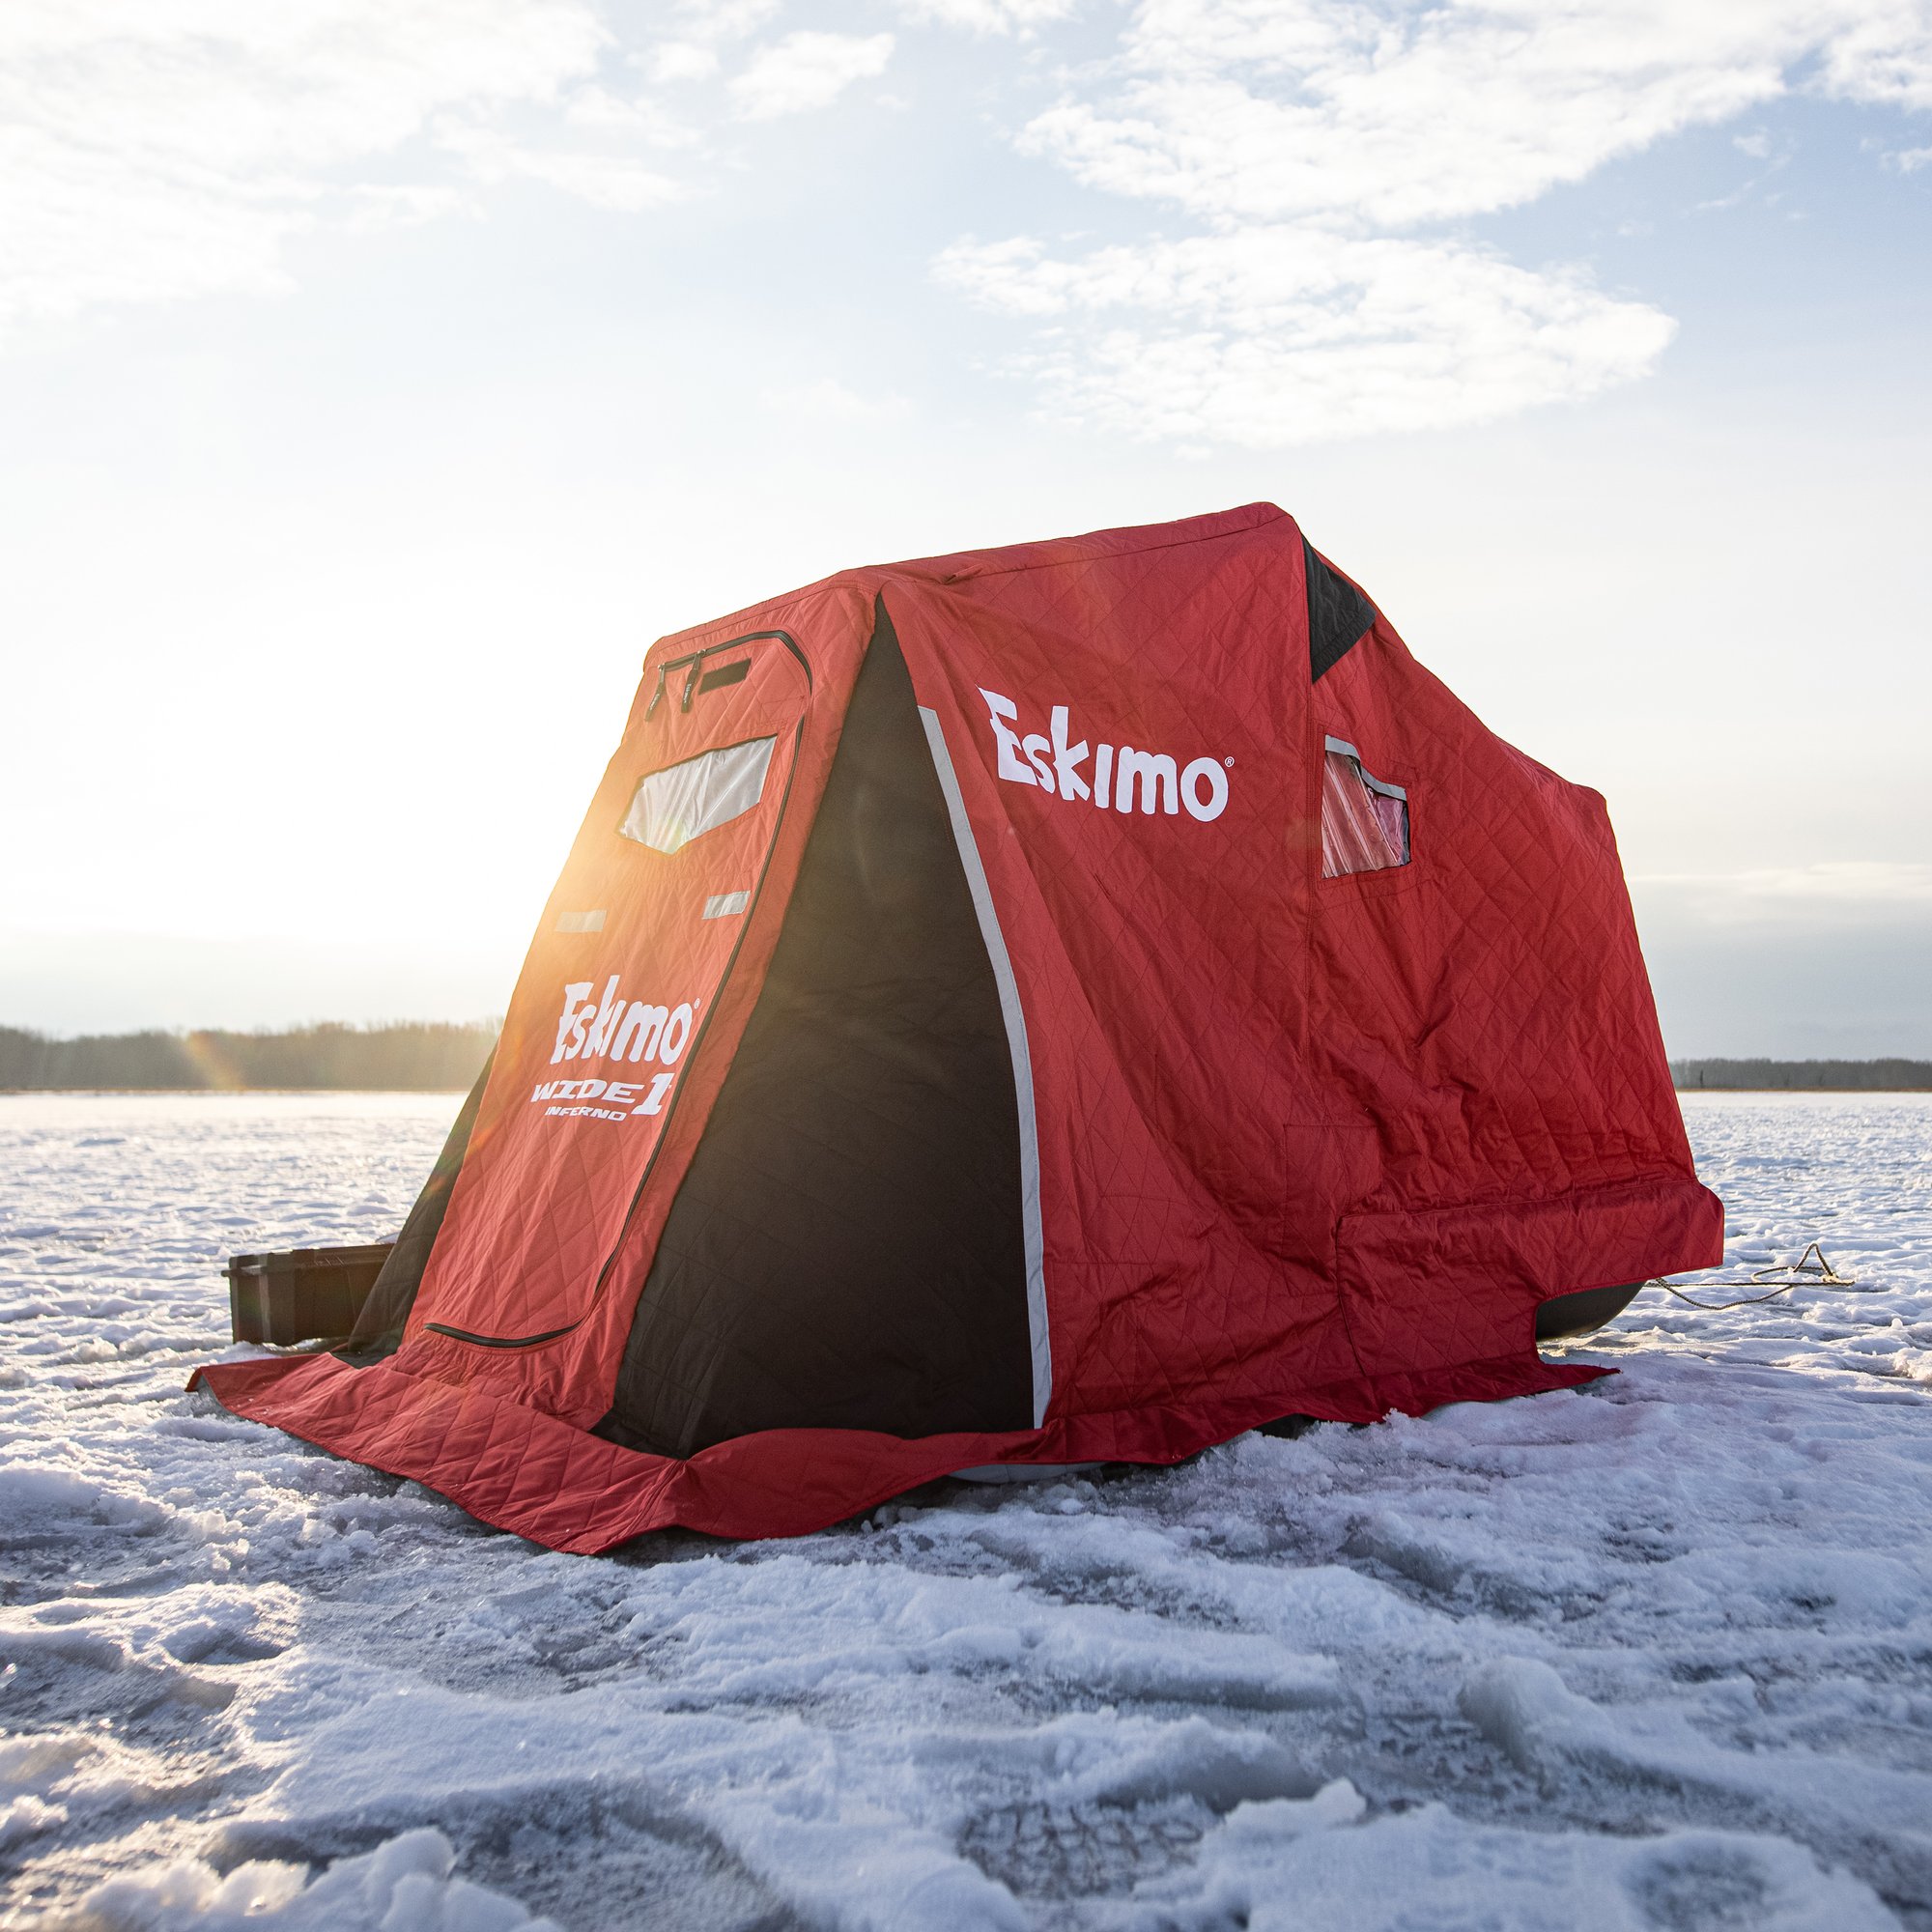 Сани палатка эскимо. Купить палатку волокуши